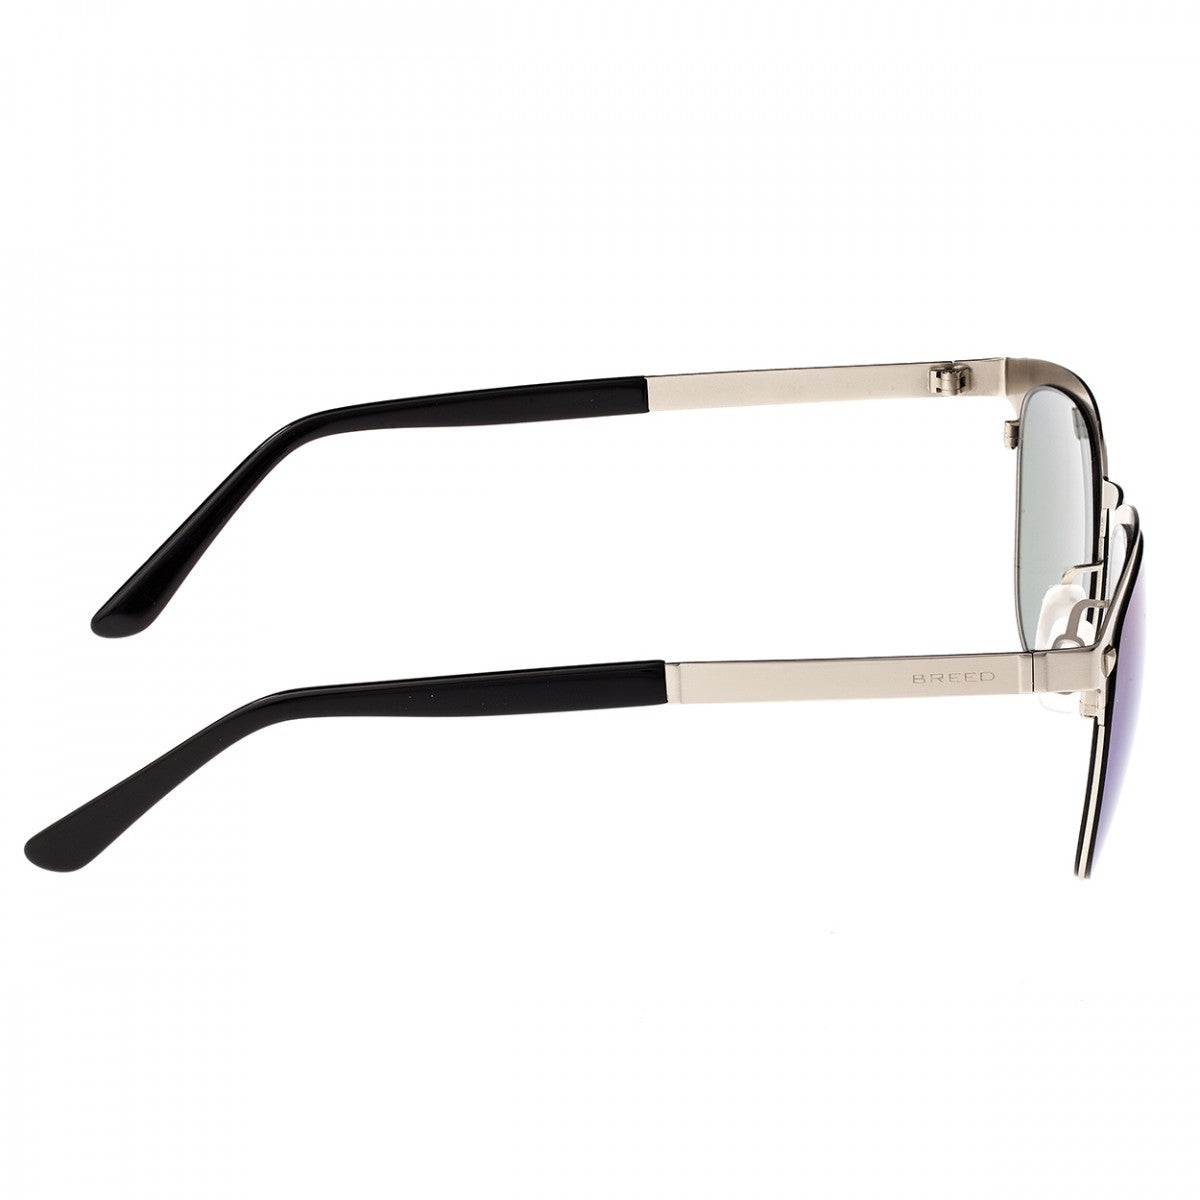 Breed Archer Polarized Sunglasses - Silver/Blue-Green - BSG050SL